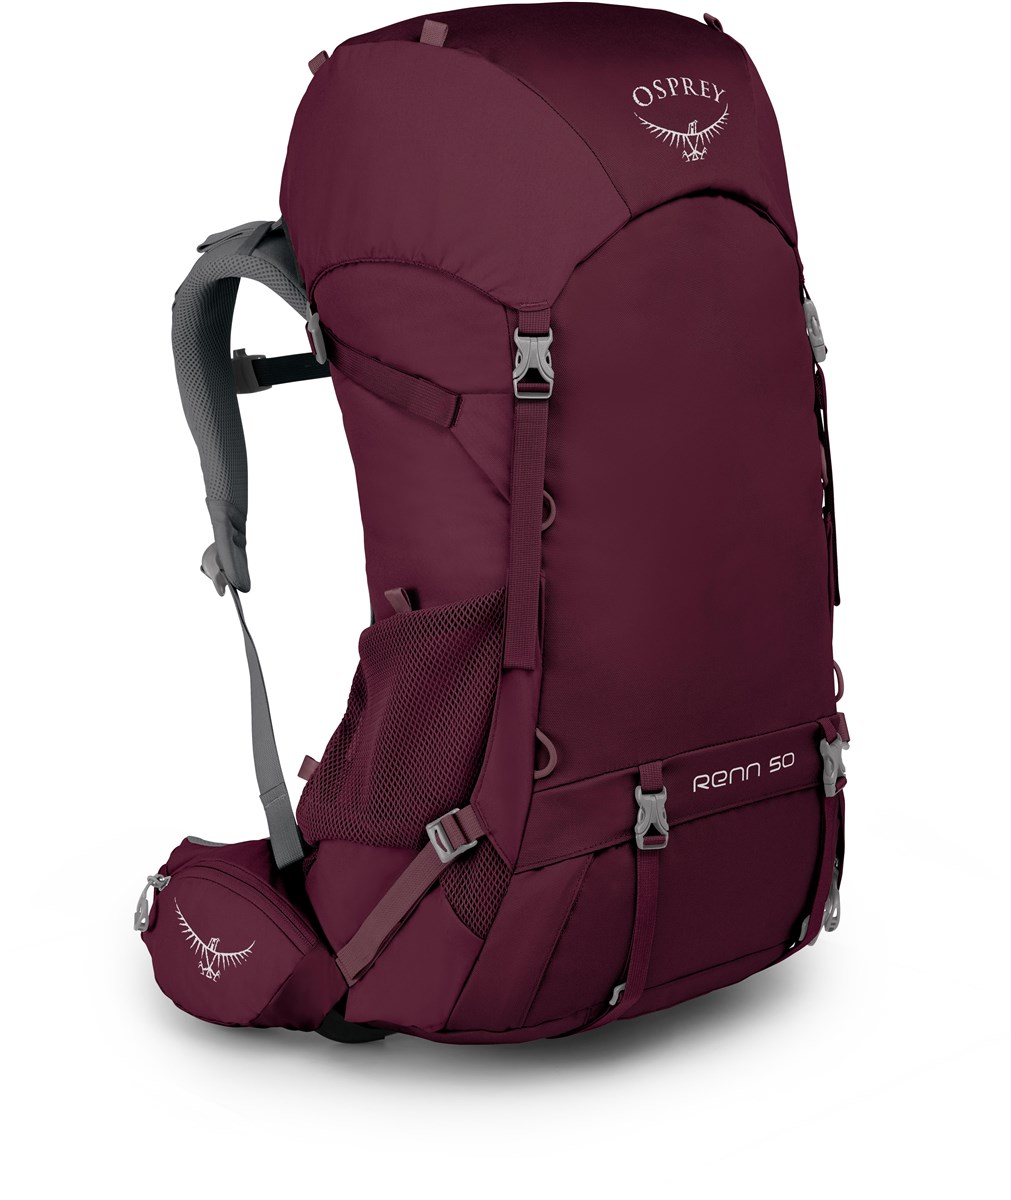 Osprey Renn 50 Womens Backpack product image